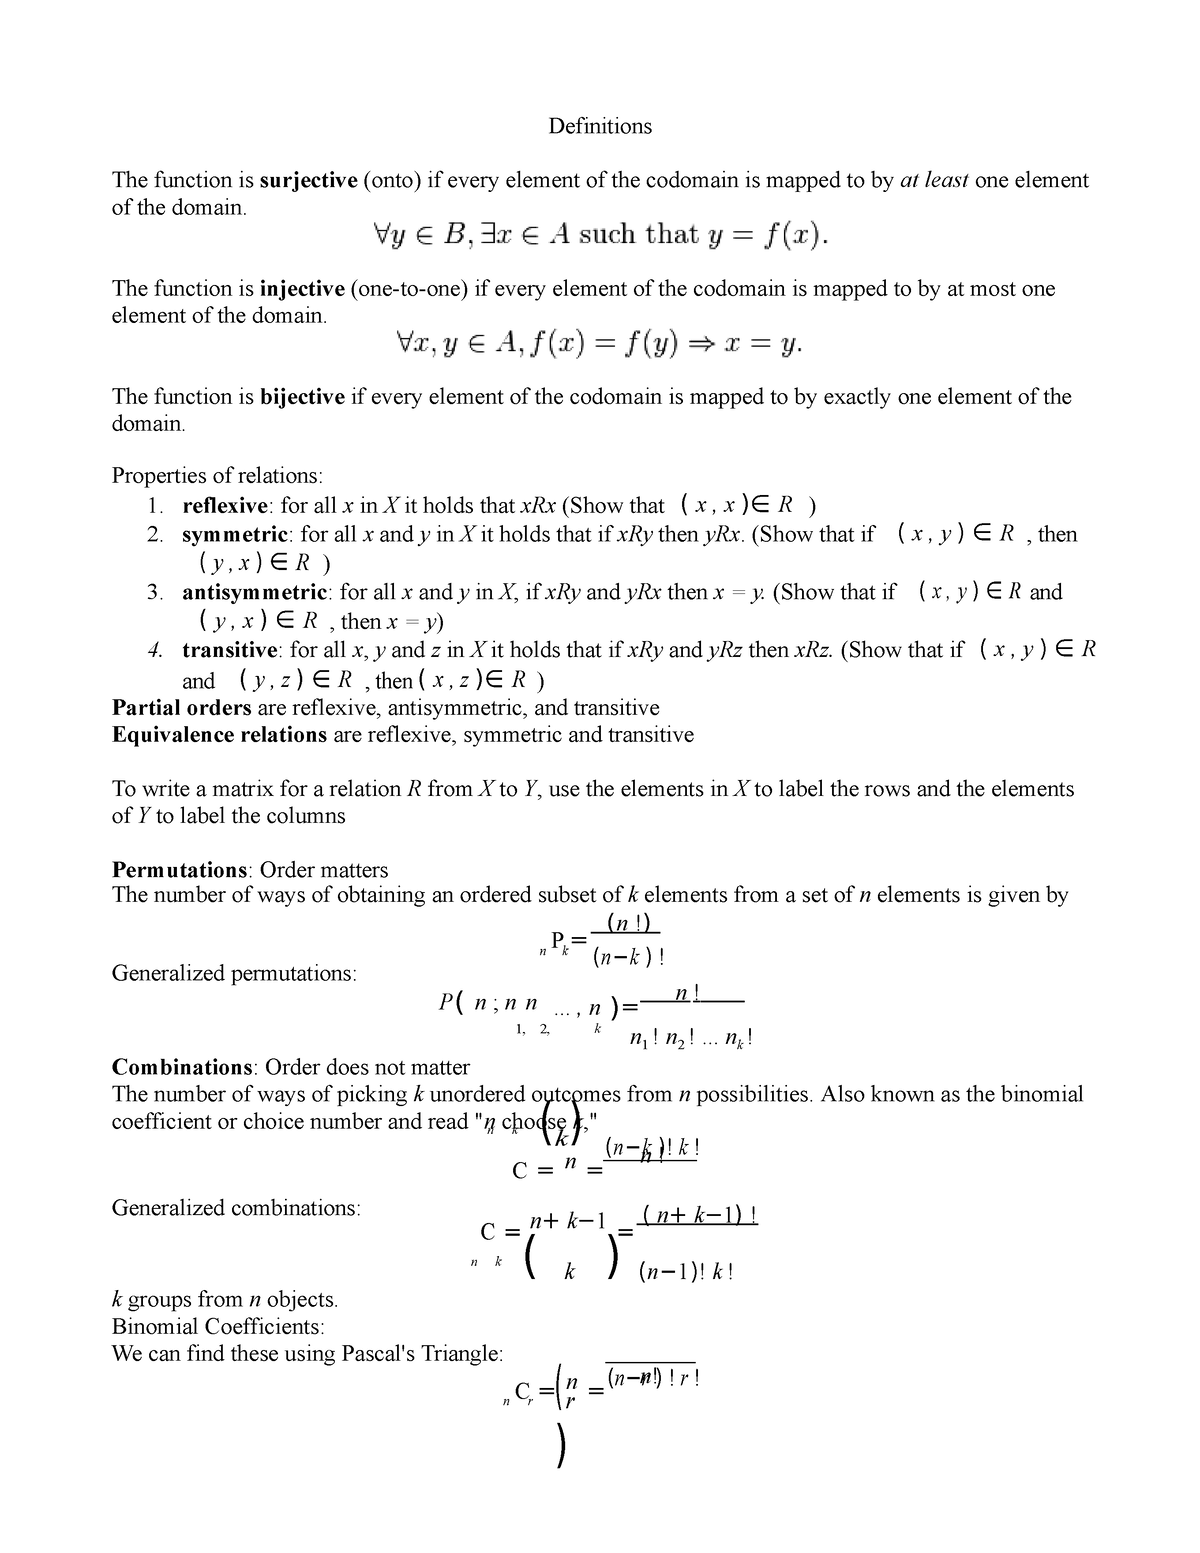 discrete mathematics essay